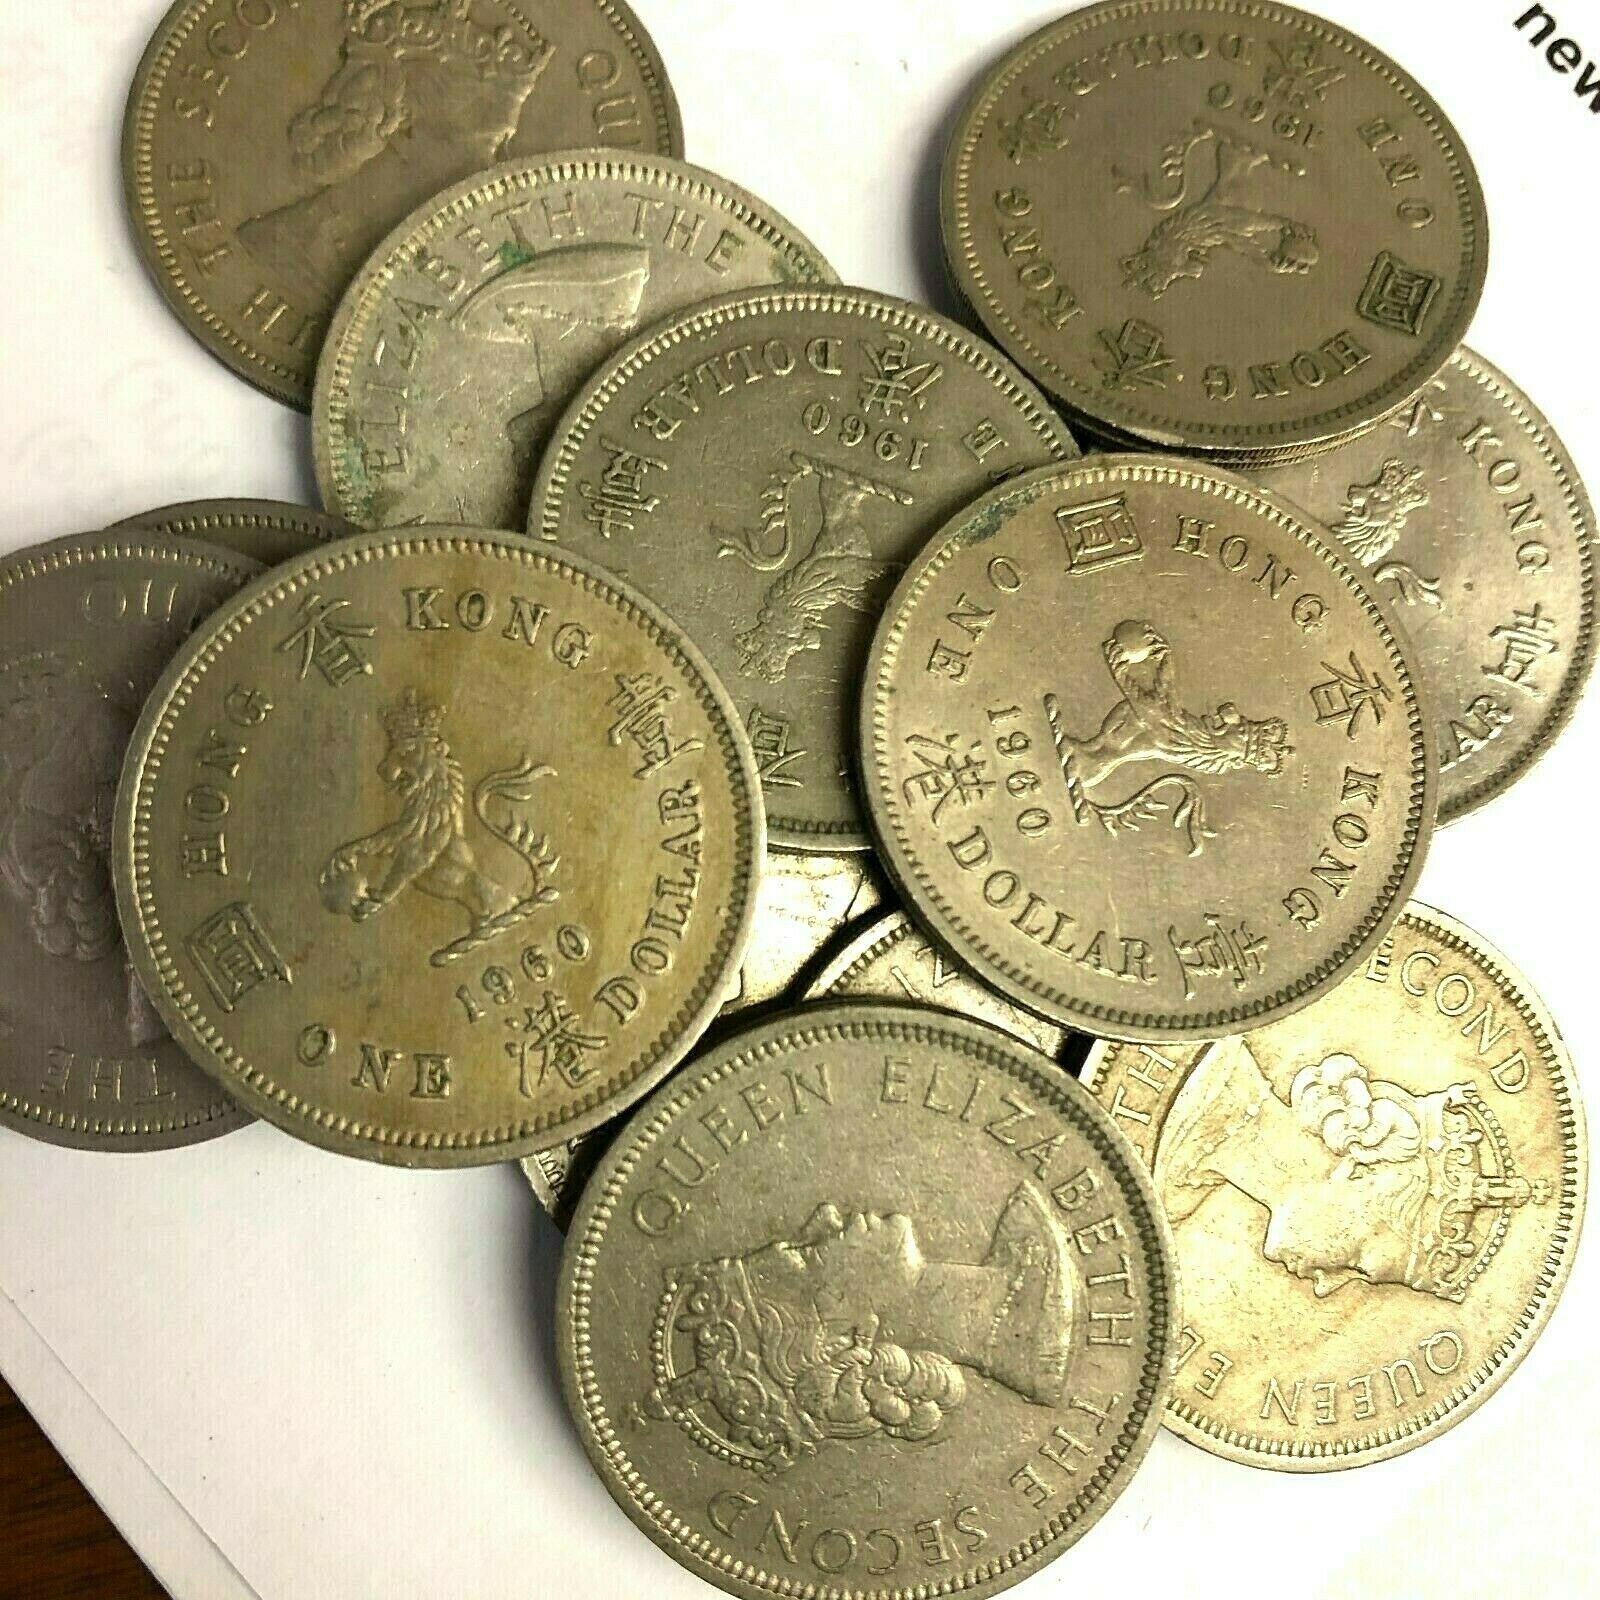 Hong Kong $1 One Dollar Vintage Coin (1960-1975 Dates), Qeii & Lion "big Dollar"